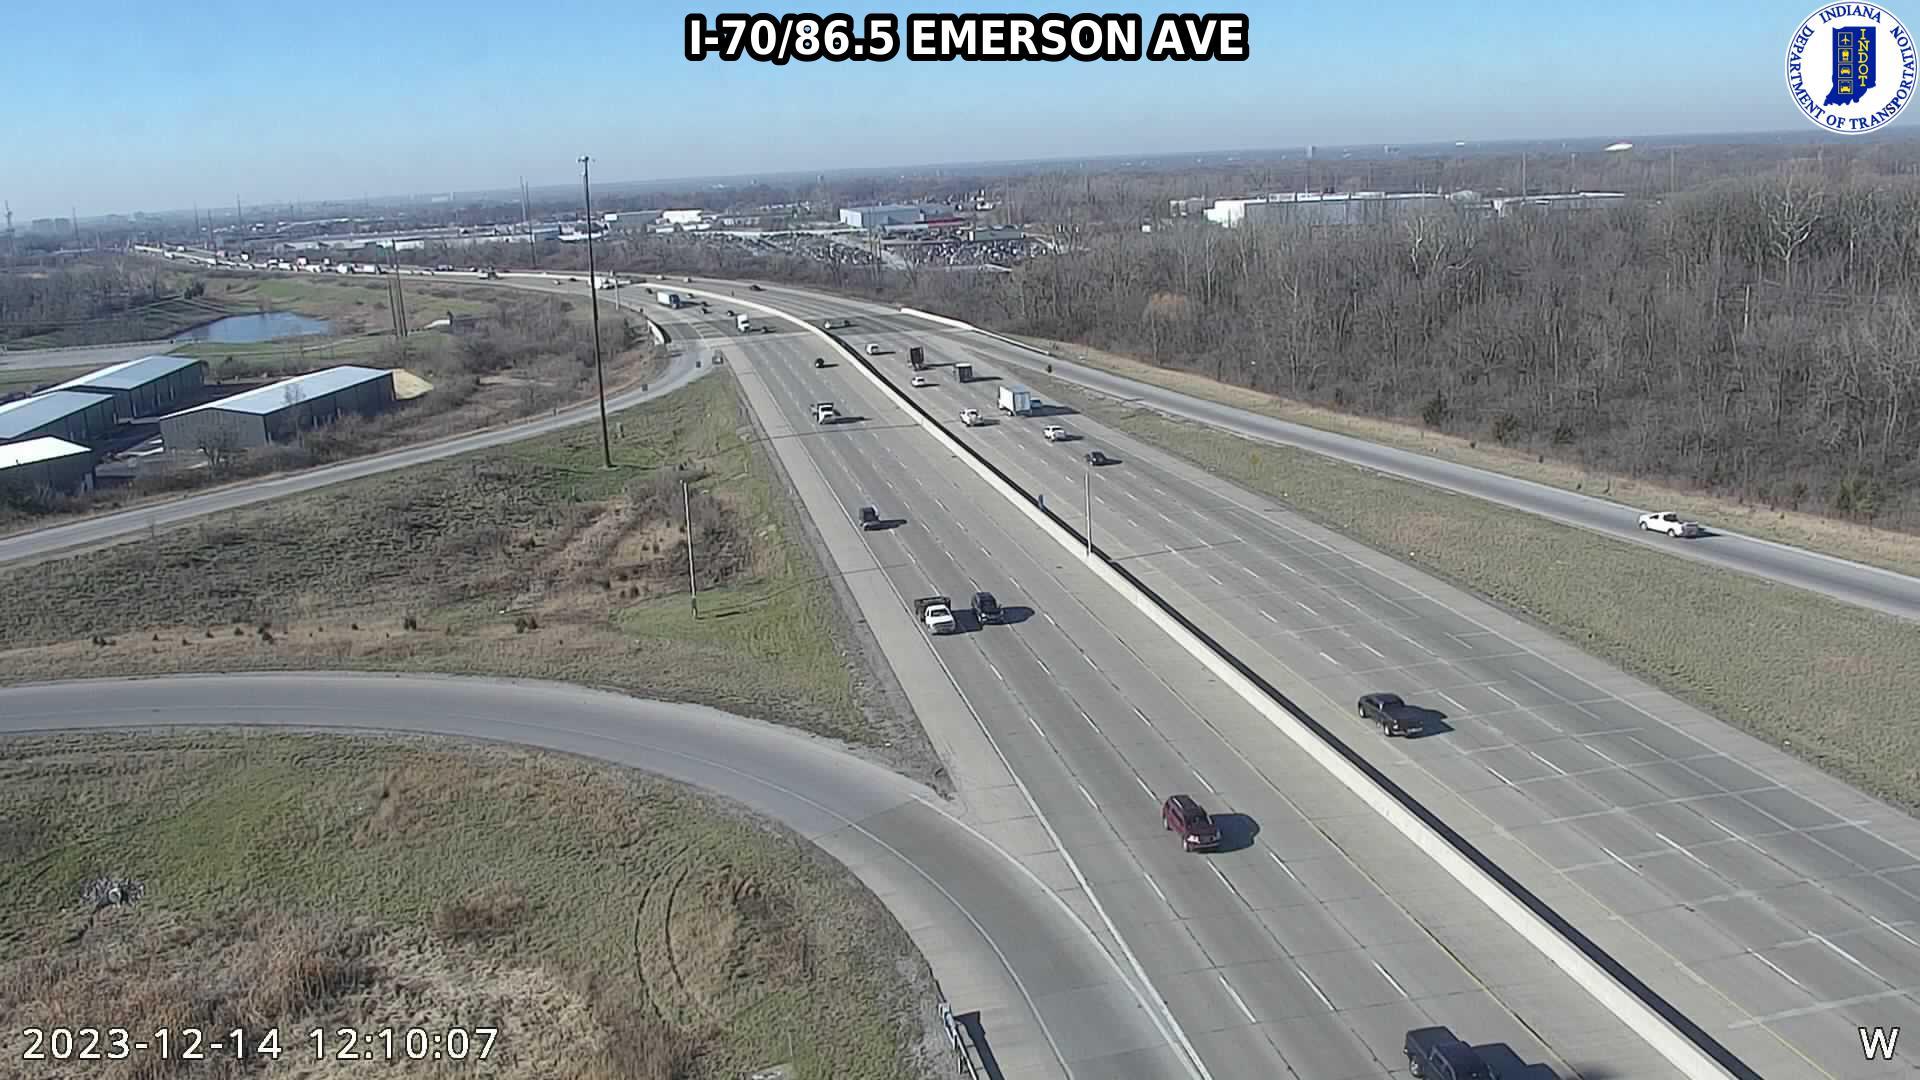 Traffic Cam Otterbein: I-70: I-70/86.5 EMERSON AVE Player